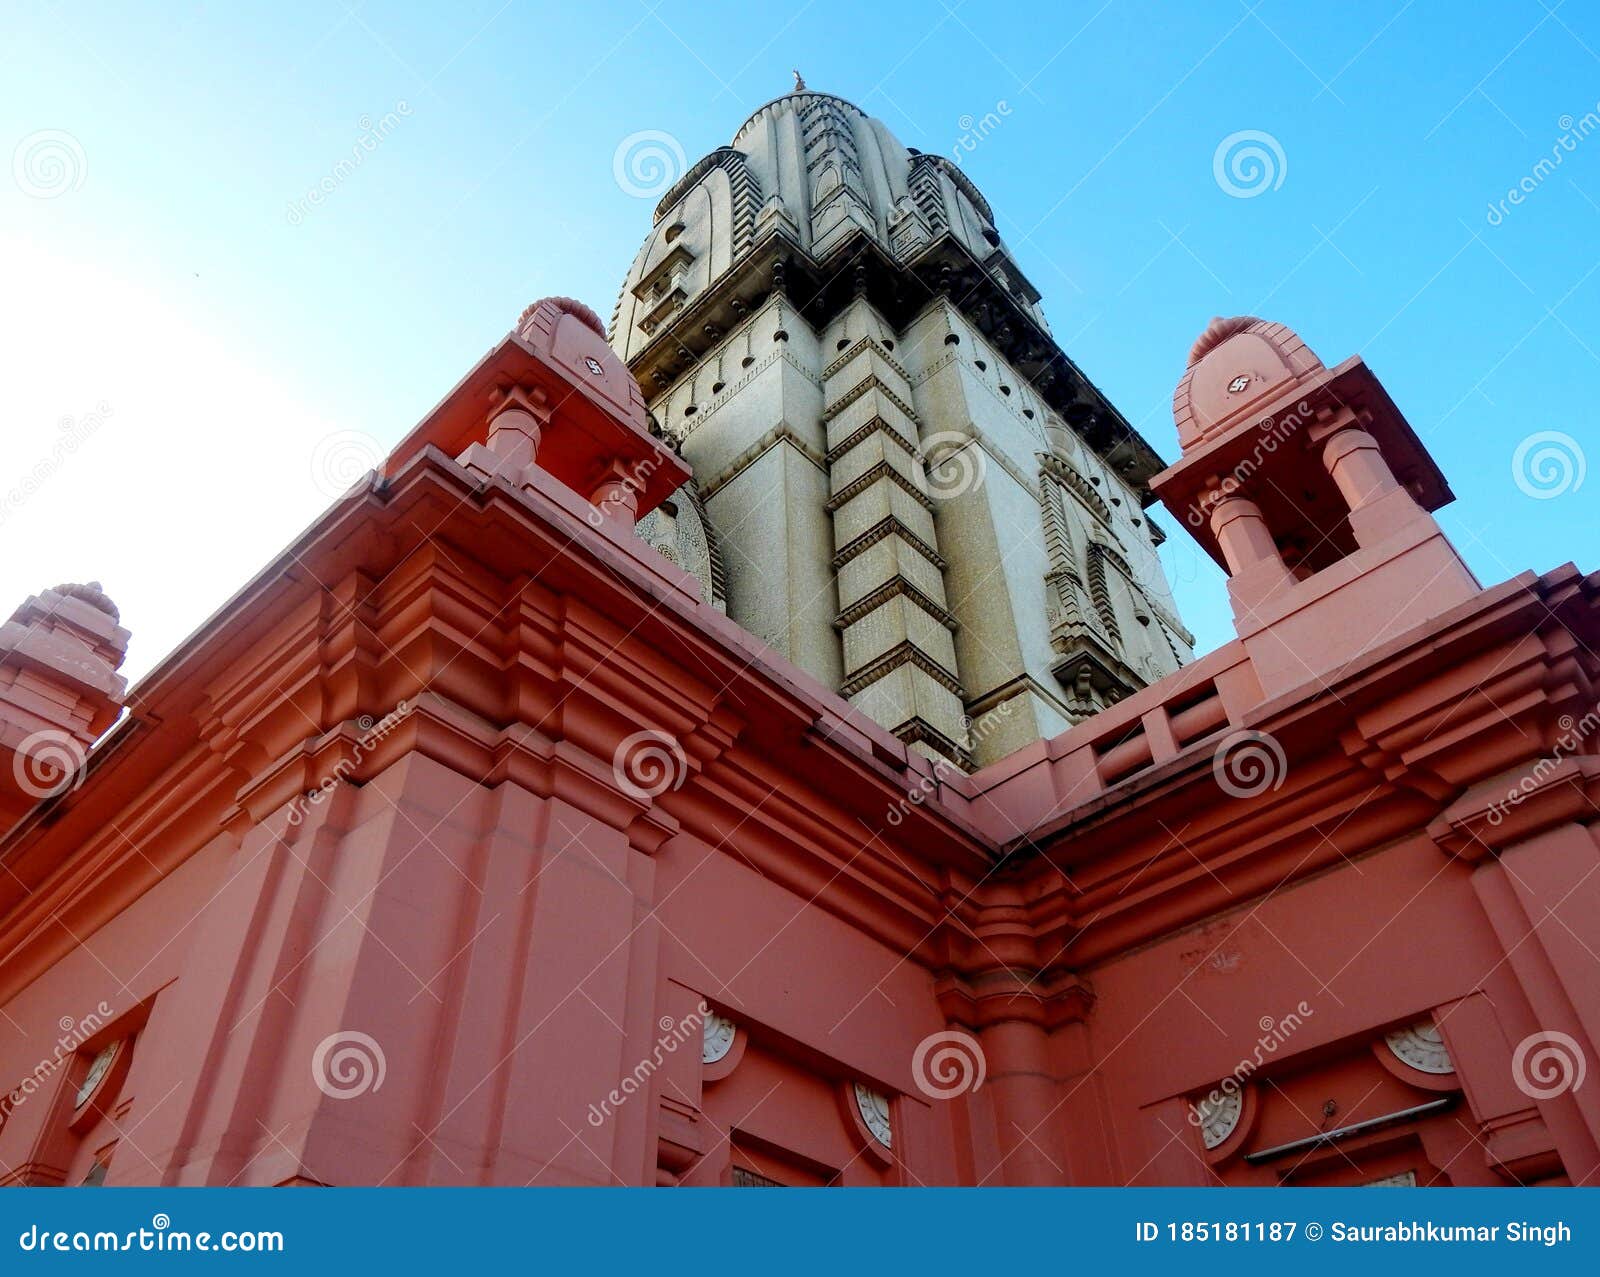 kashi vishwanath temple or kashi vishwanath mandir famous  hindu temple